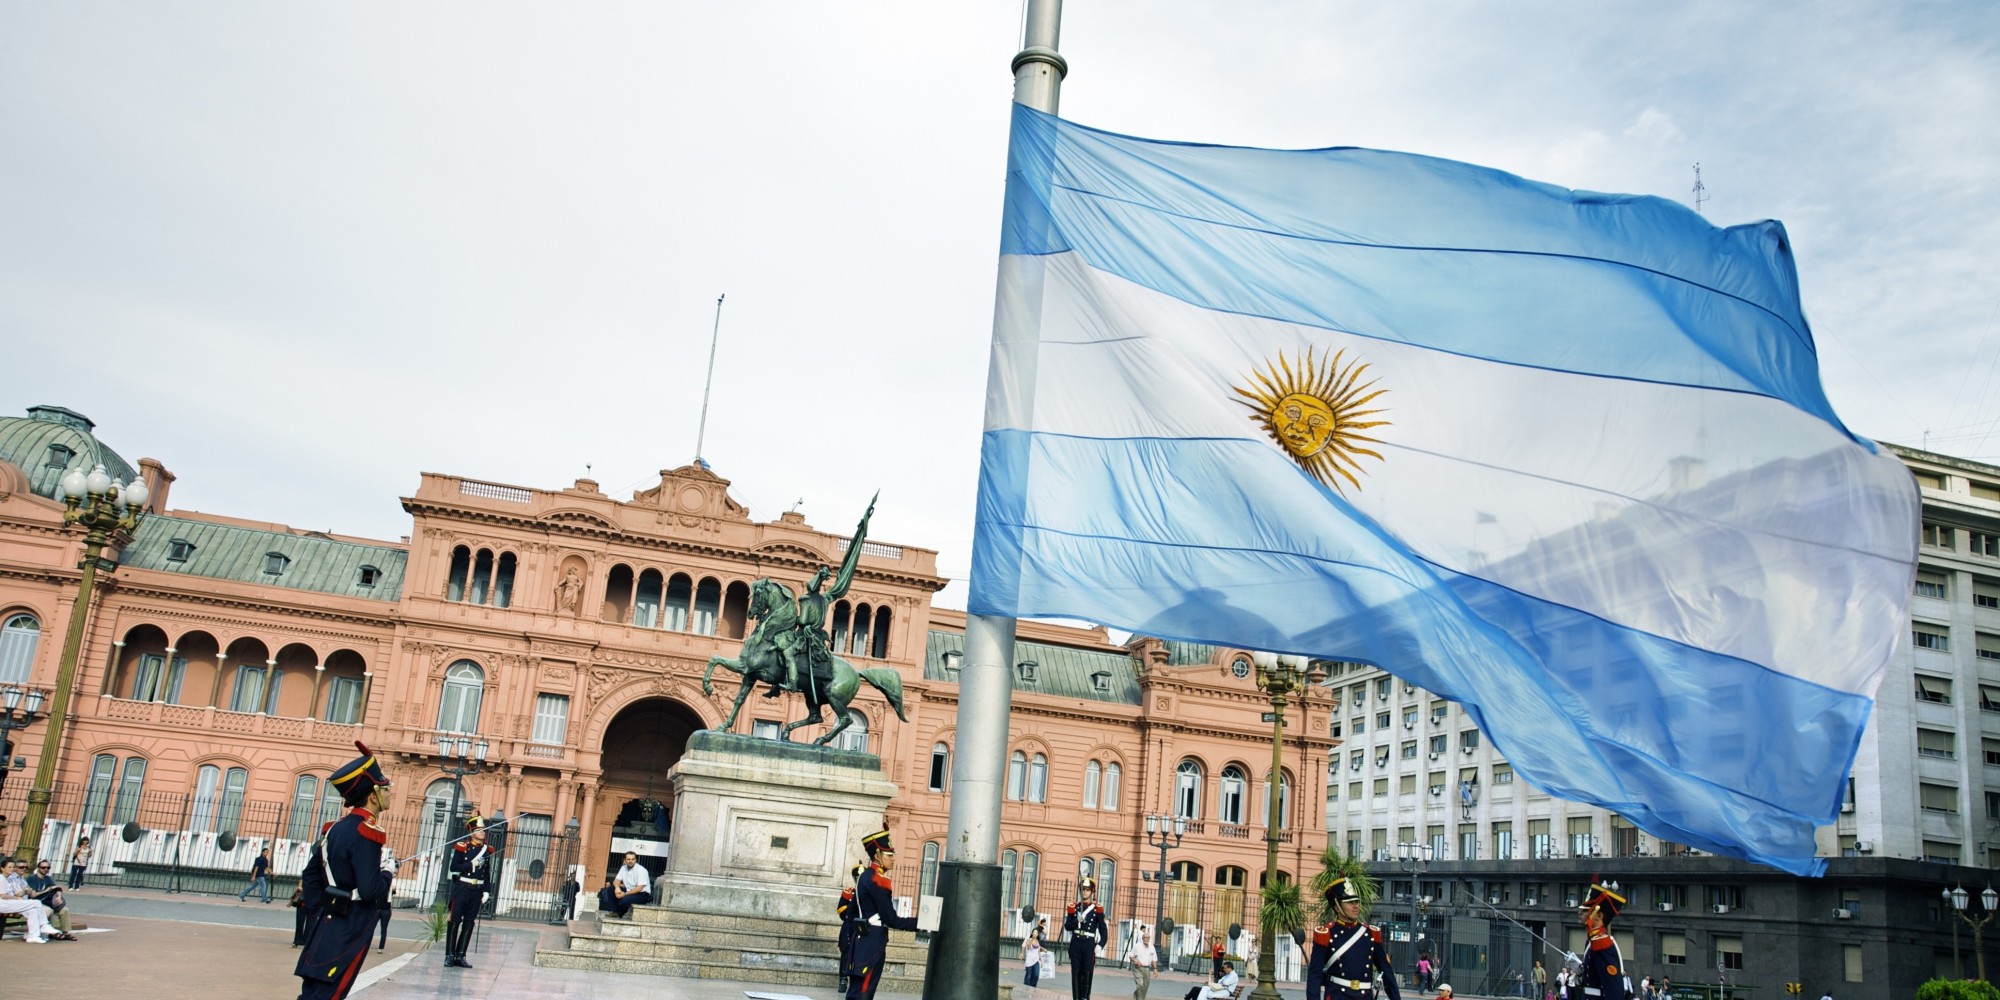 residencia temporal en argentina- acn